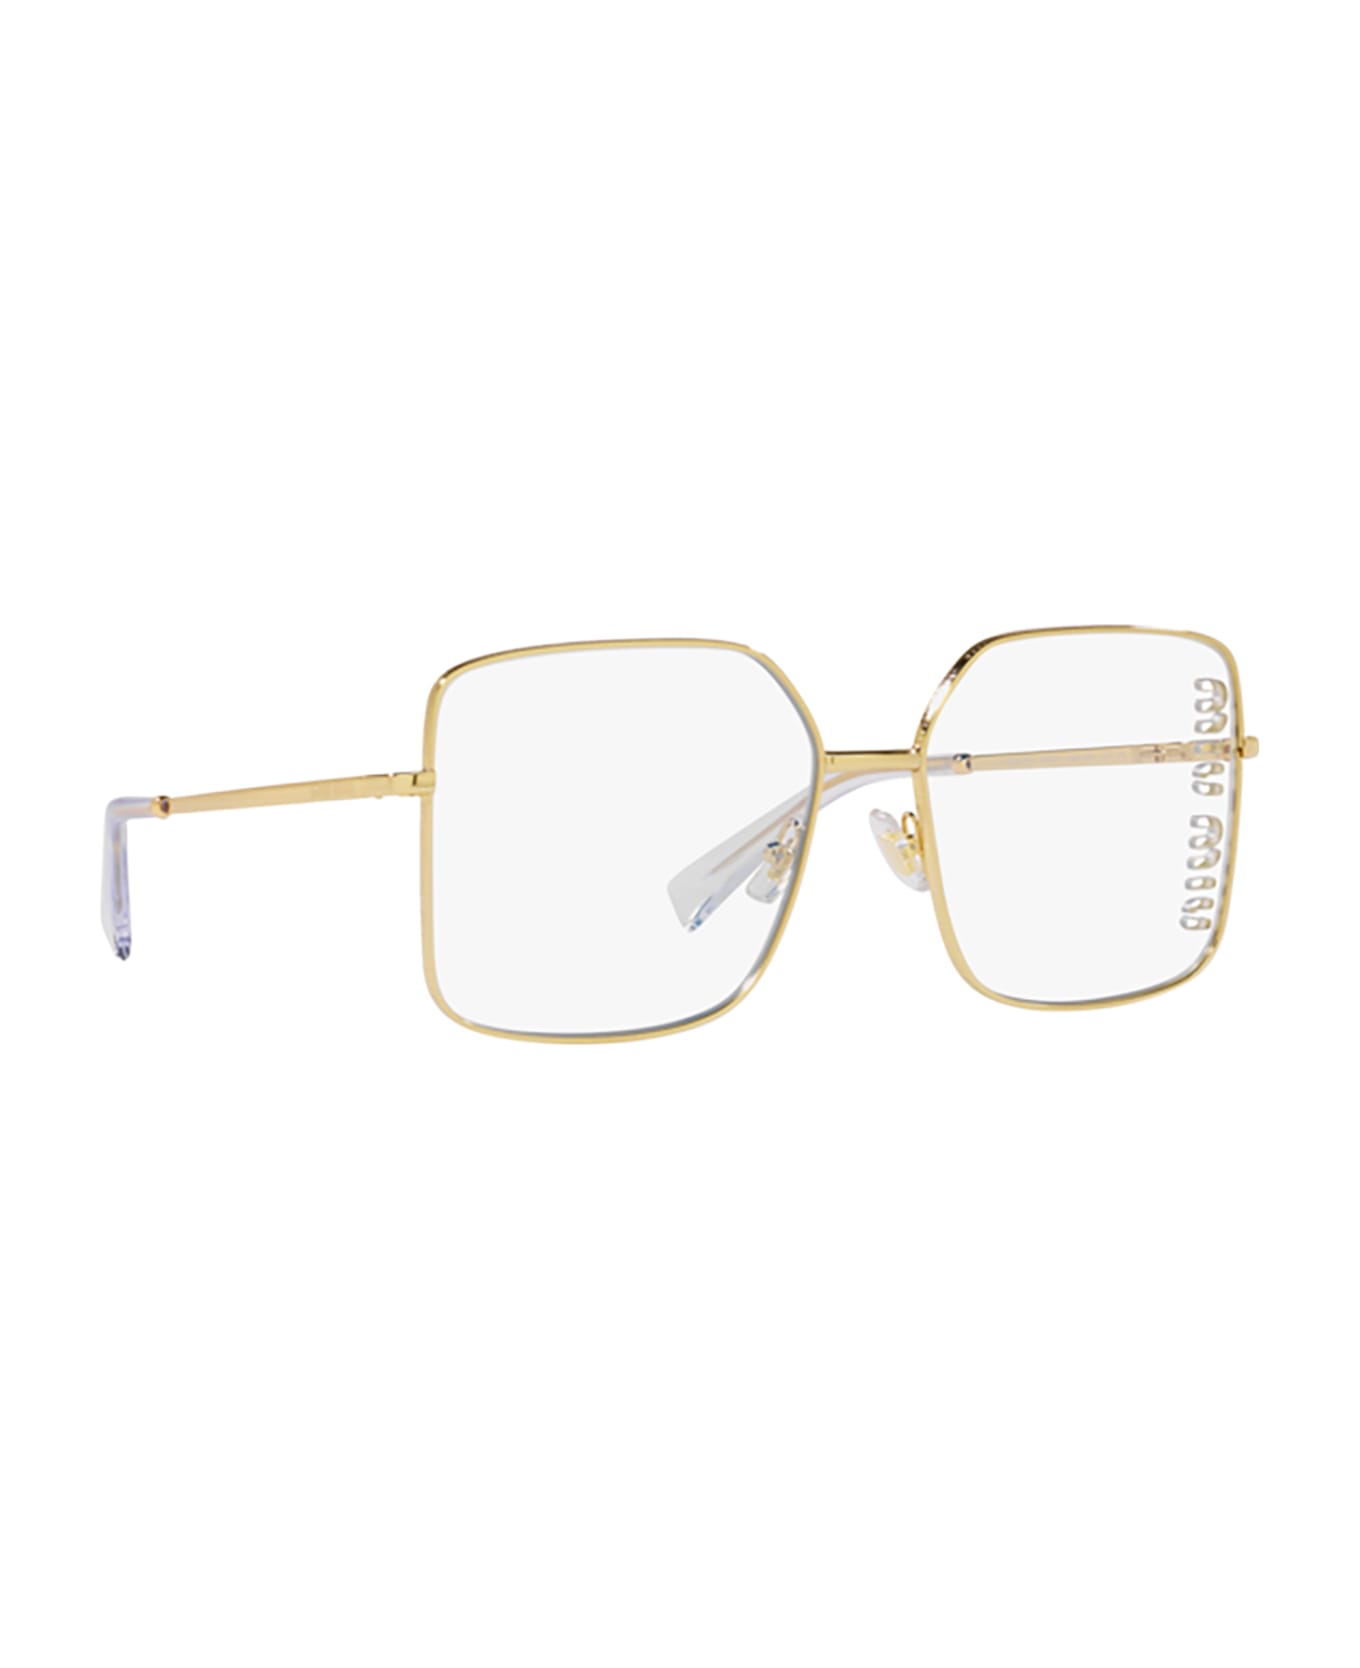 Miu Miu Eyewear Mu 51ys Gold Sunglasses - Gold